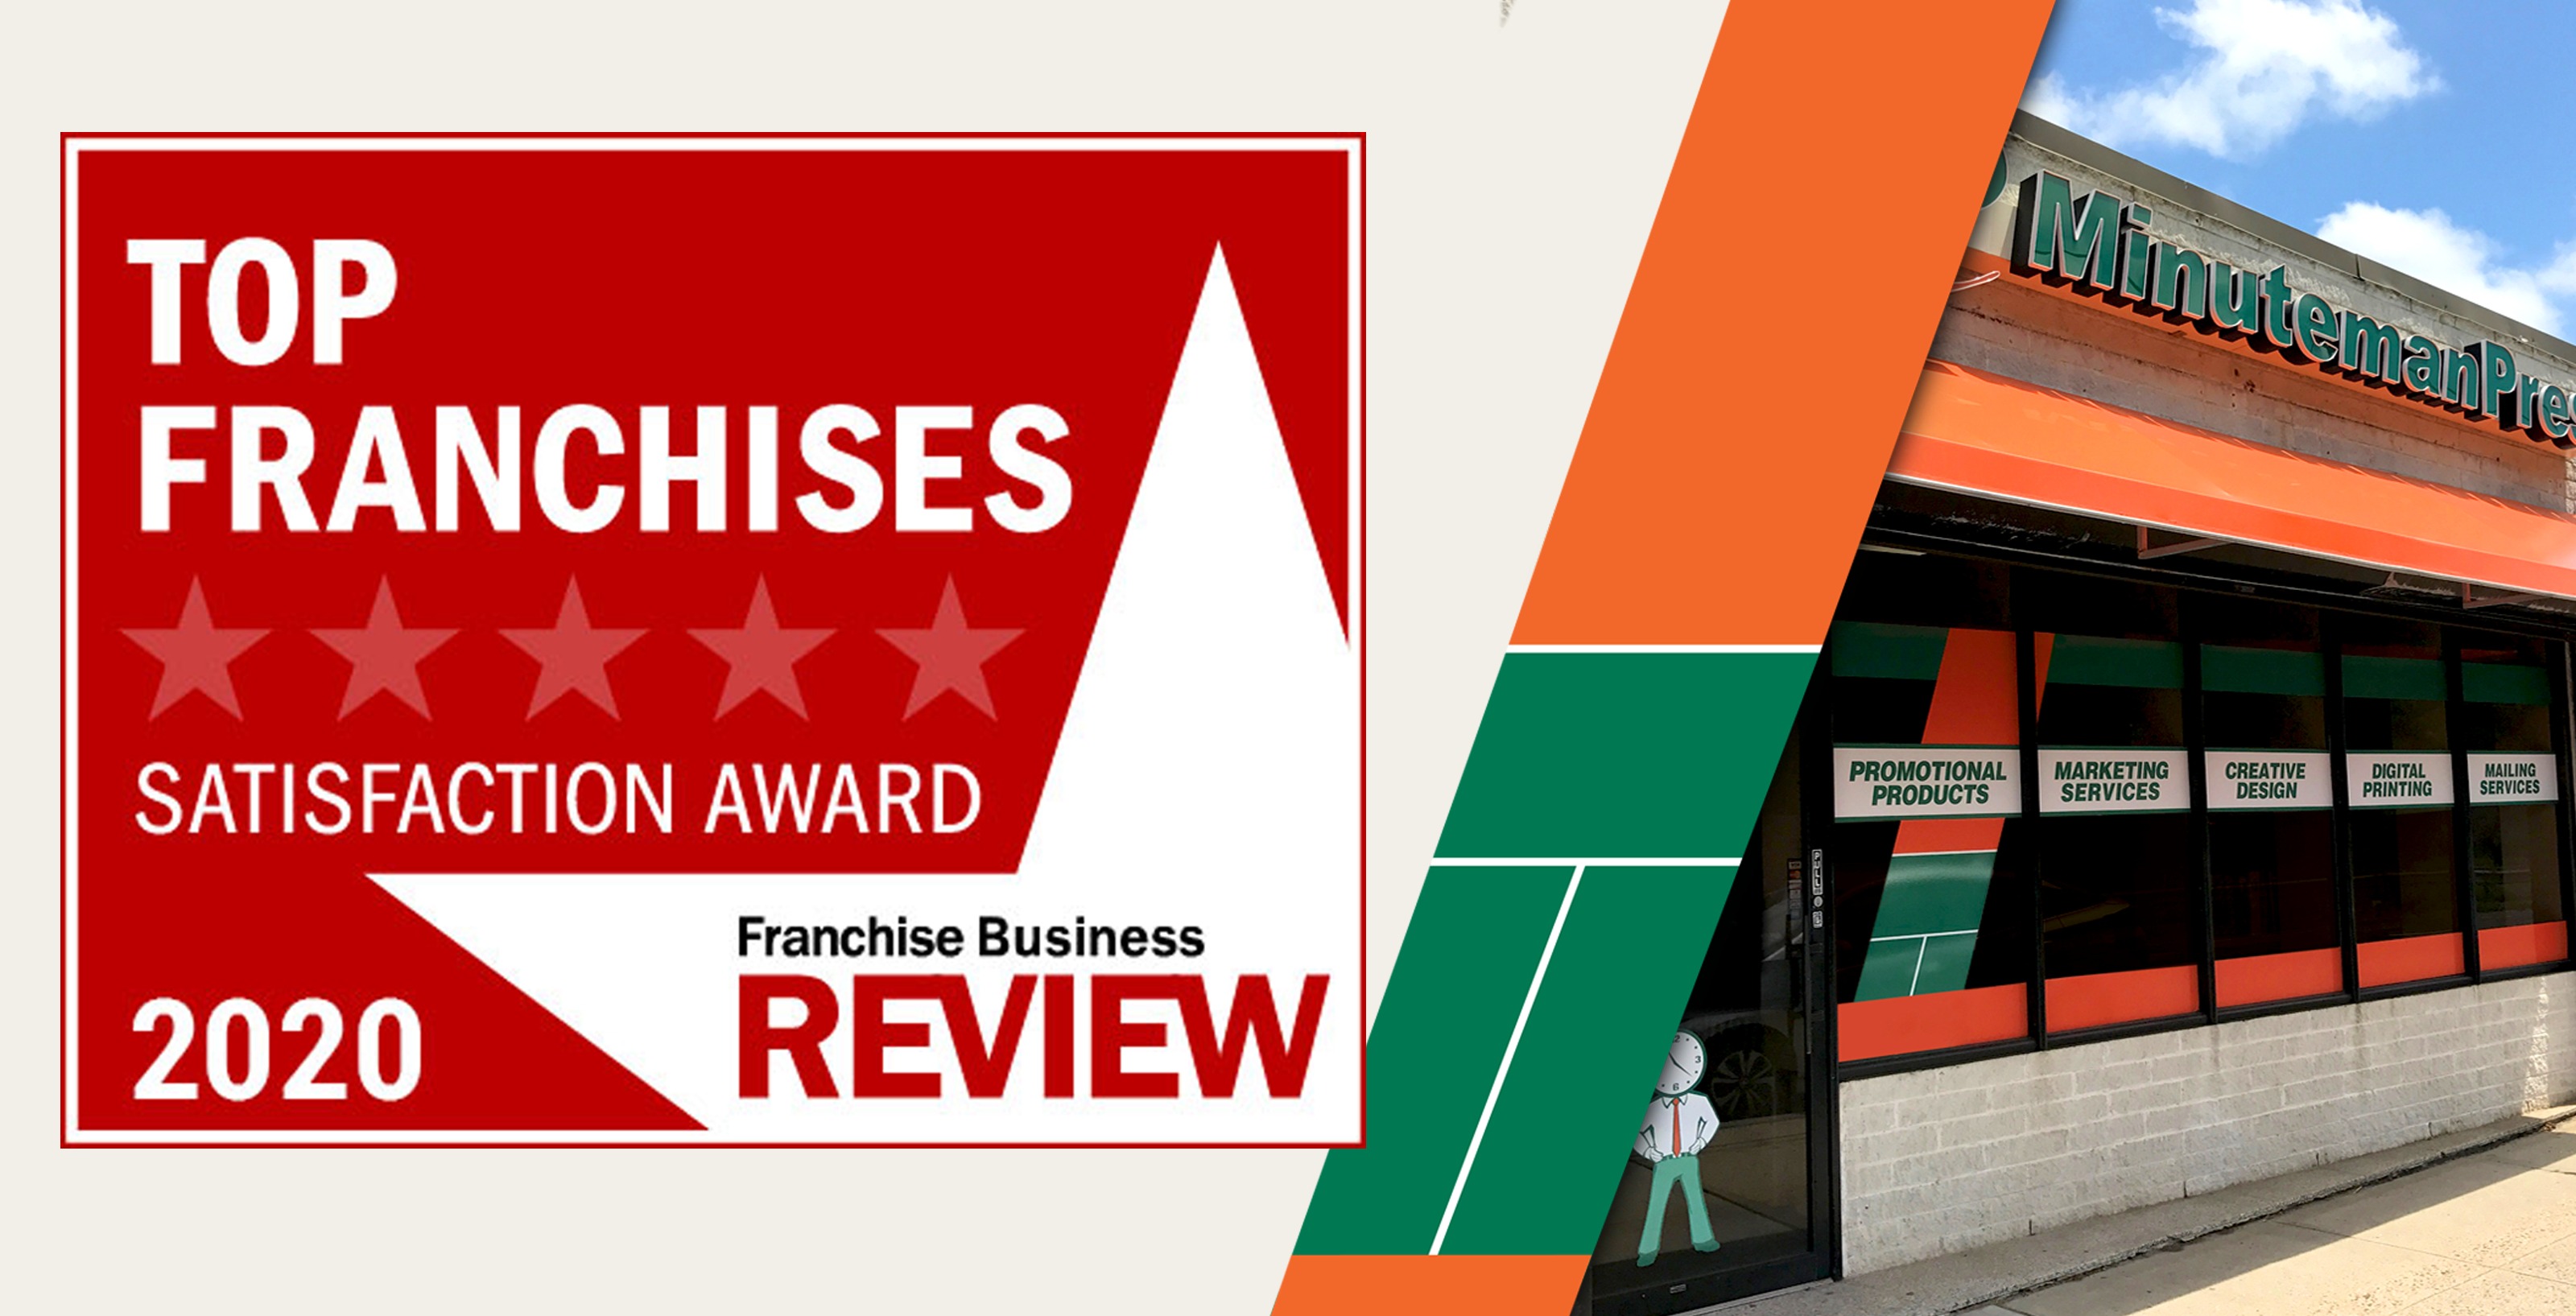 Minuteman Press Franchise Business Review 2020 Award